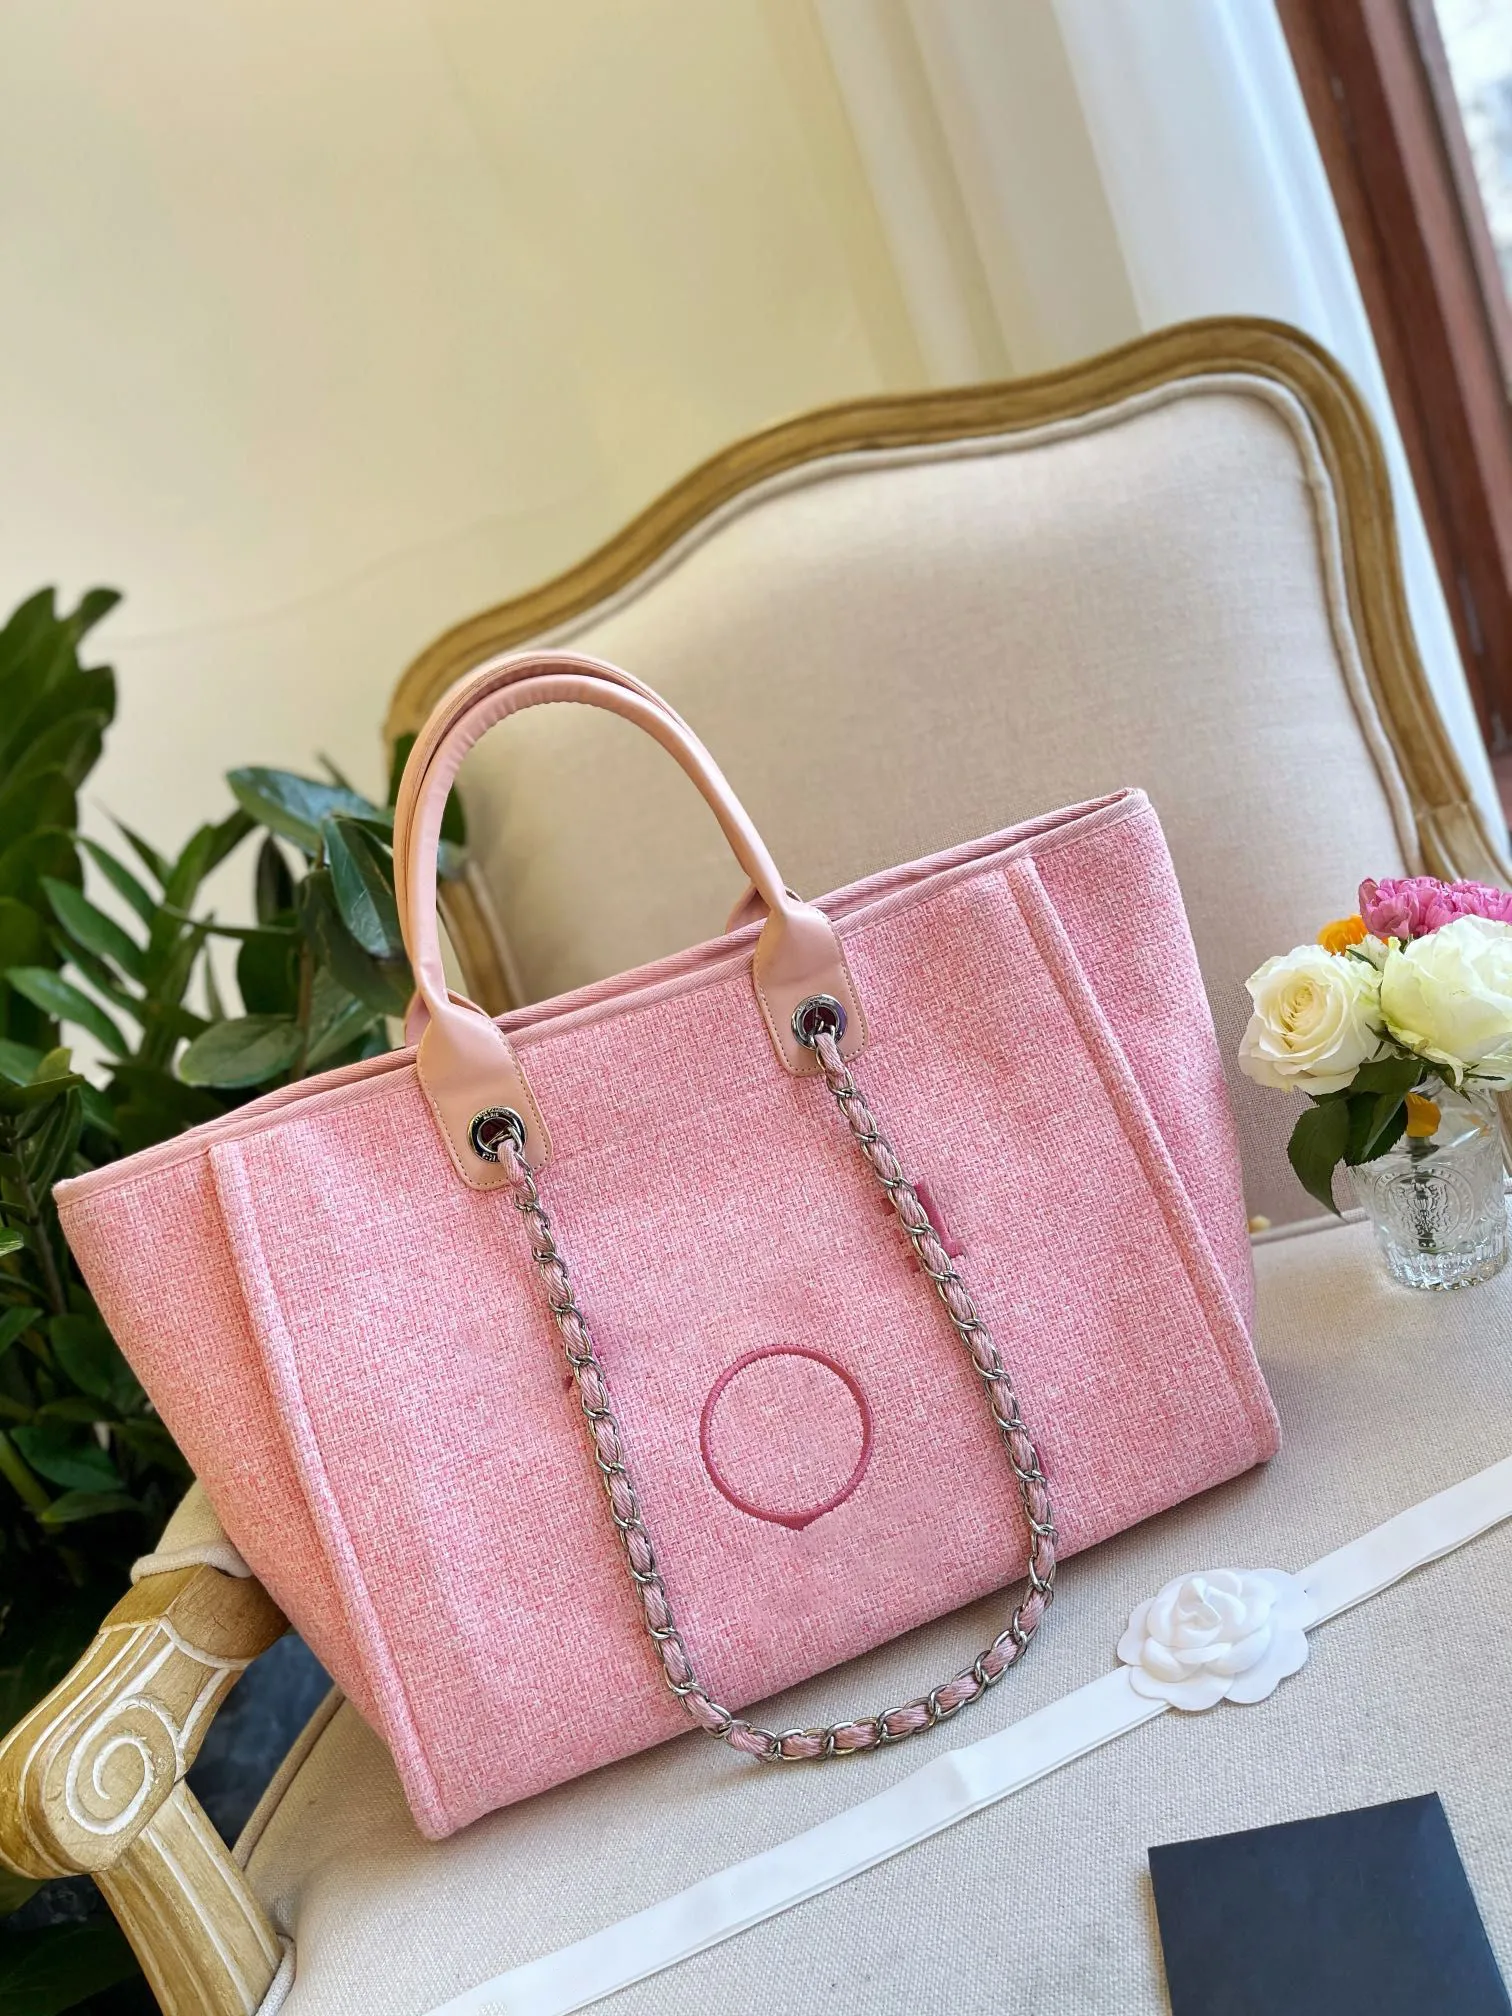 5cc woman bag genuine leather cosmetic handbag case tote